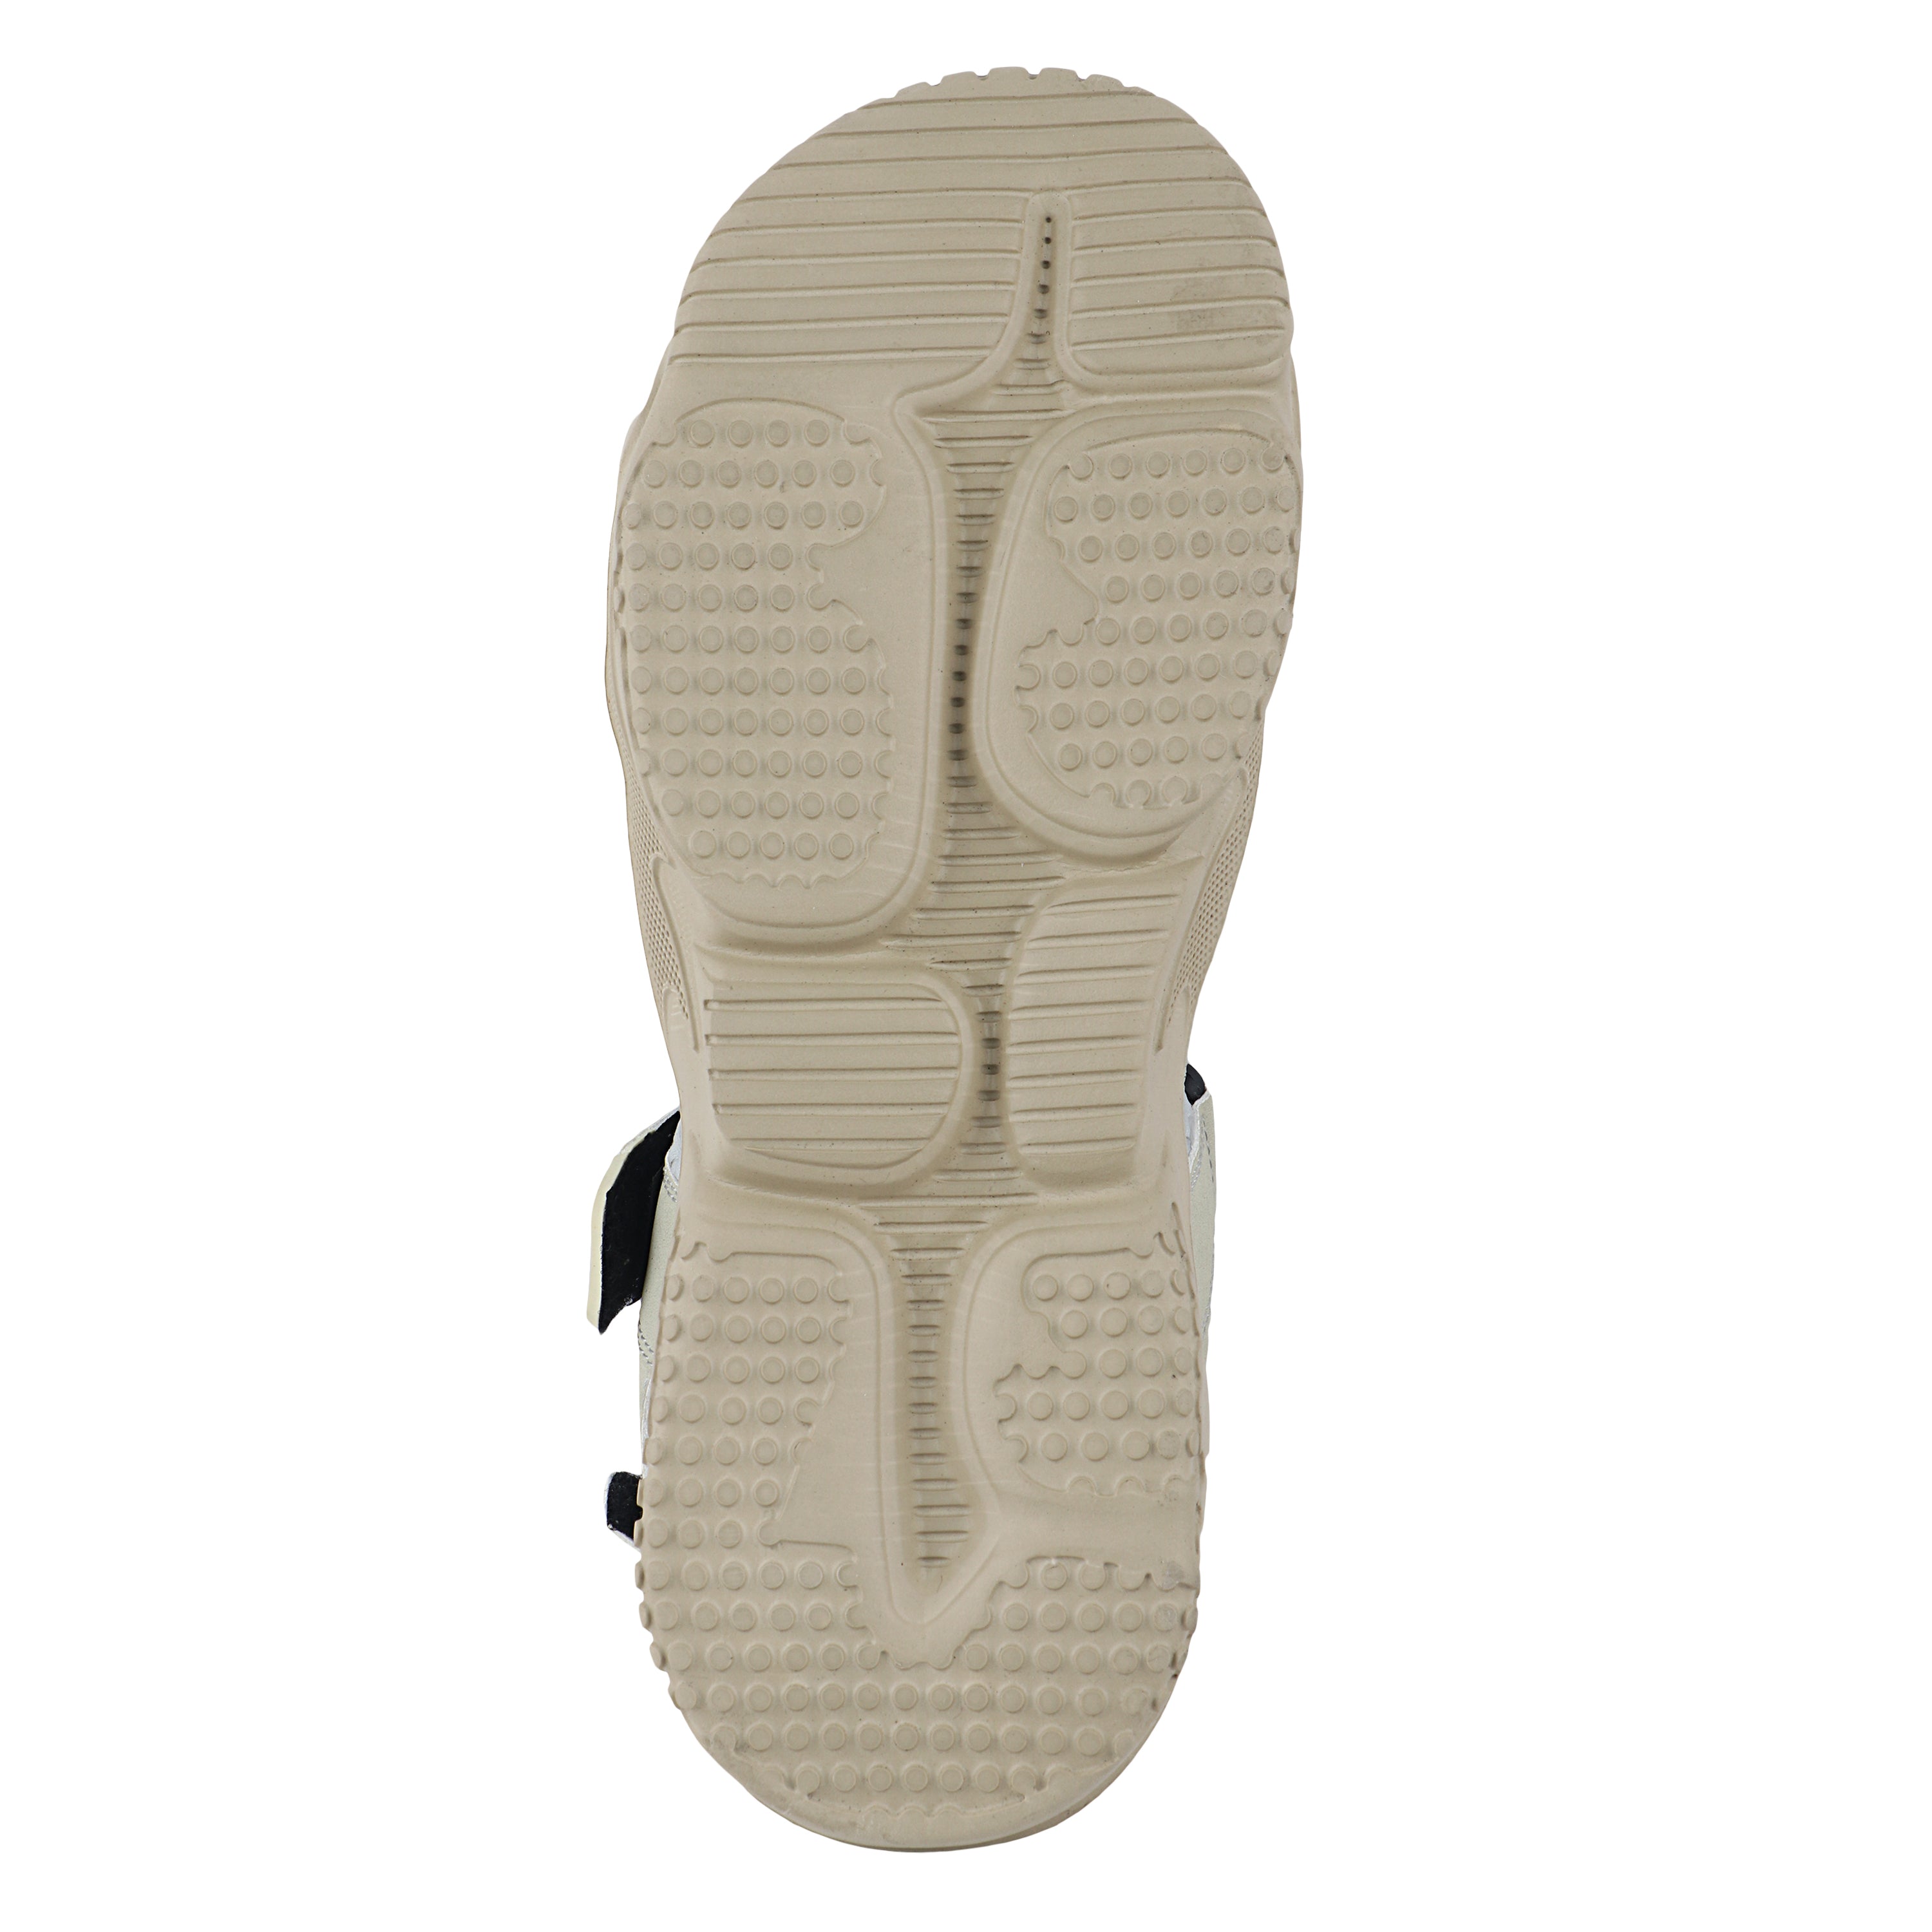 Fuel Keta Sandals For Men's (Beige-Olive)